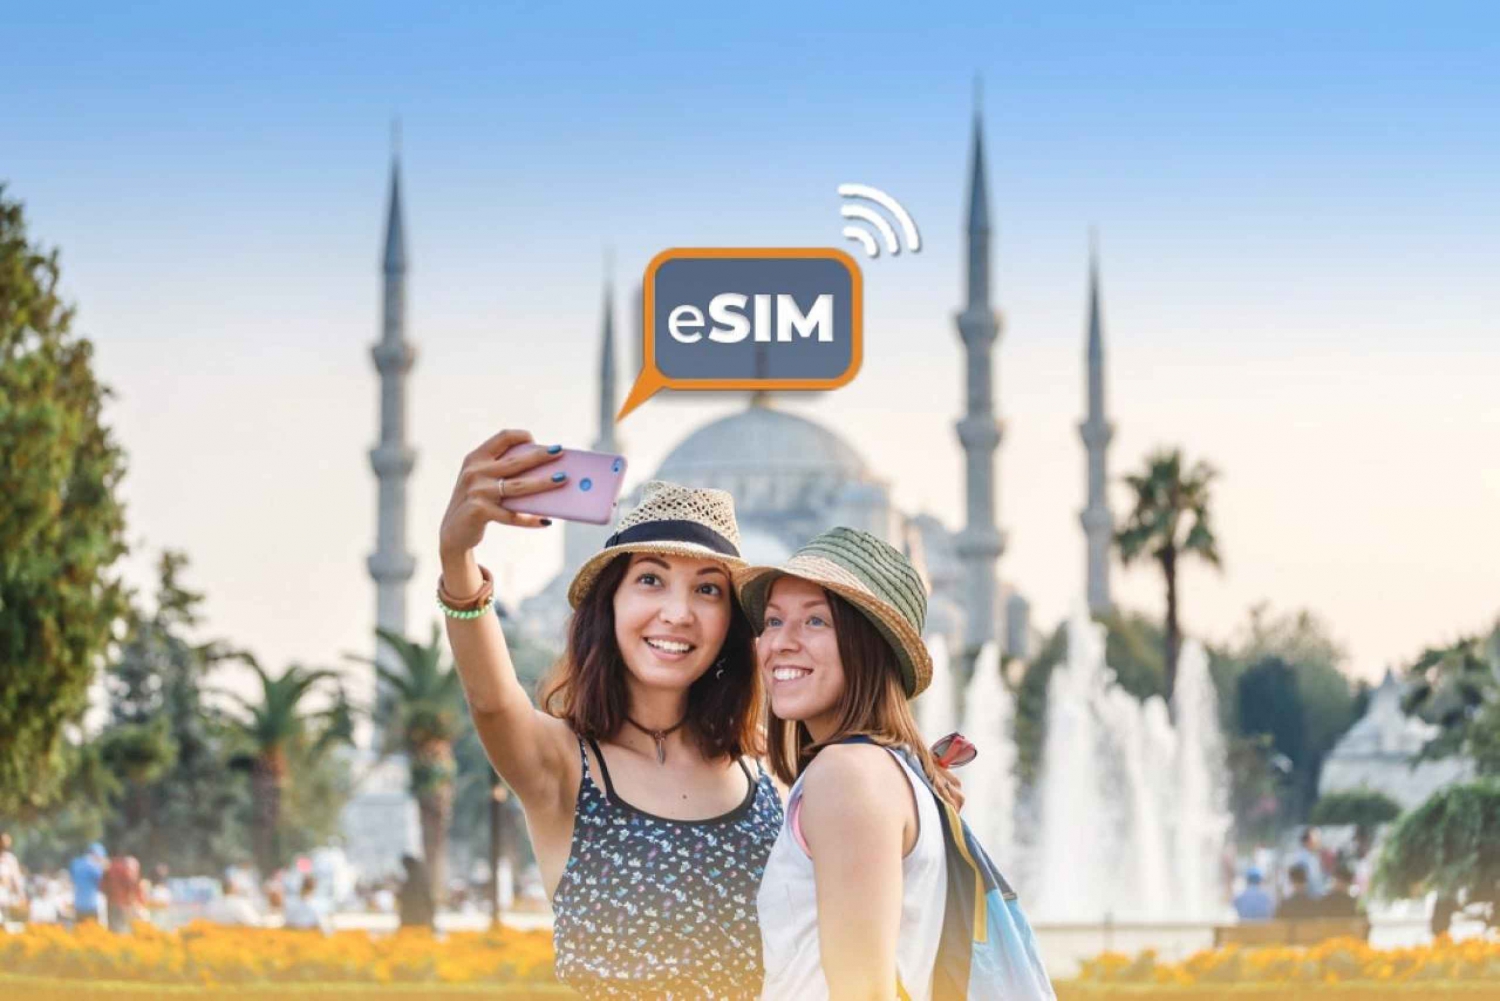 Bodrum / Turkey: Roaming Internet with eSIM Mobile Data